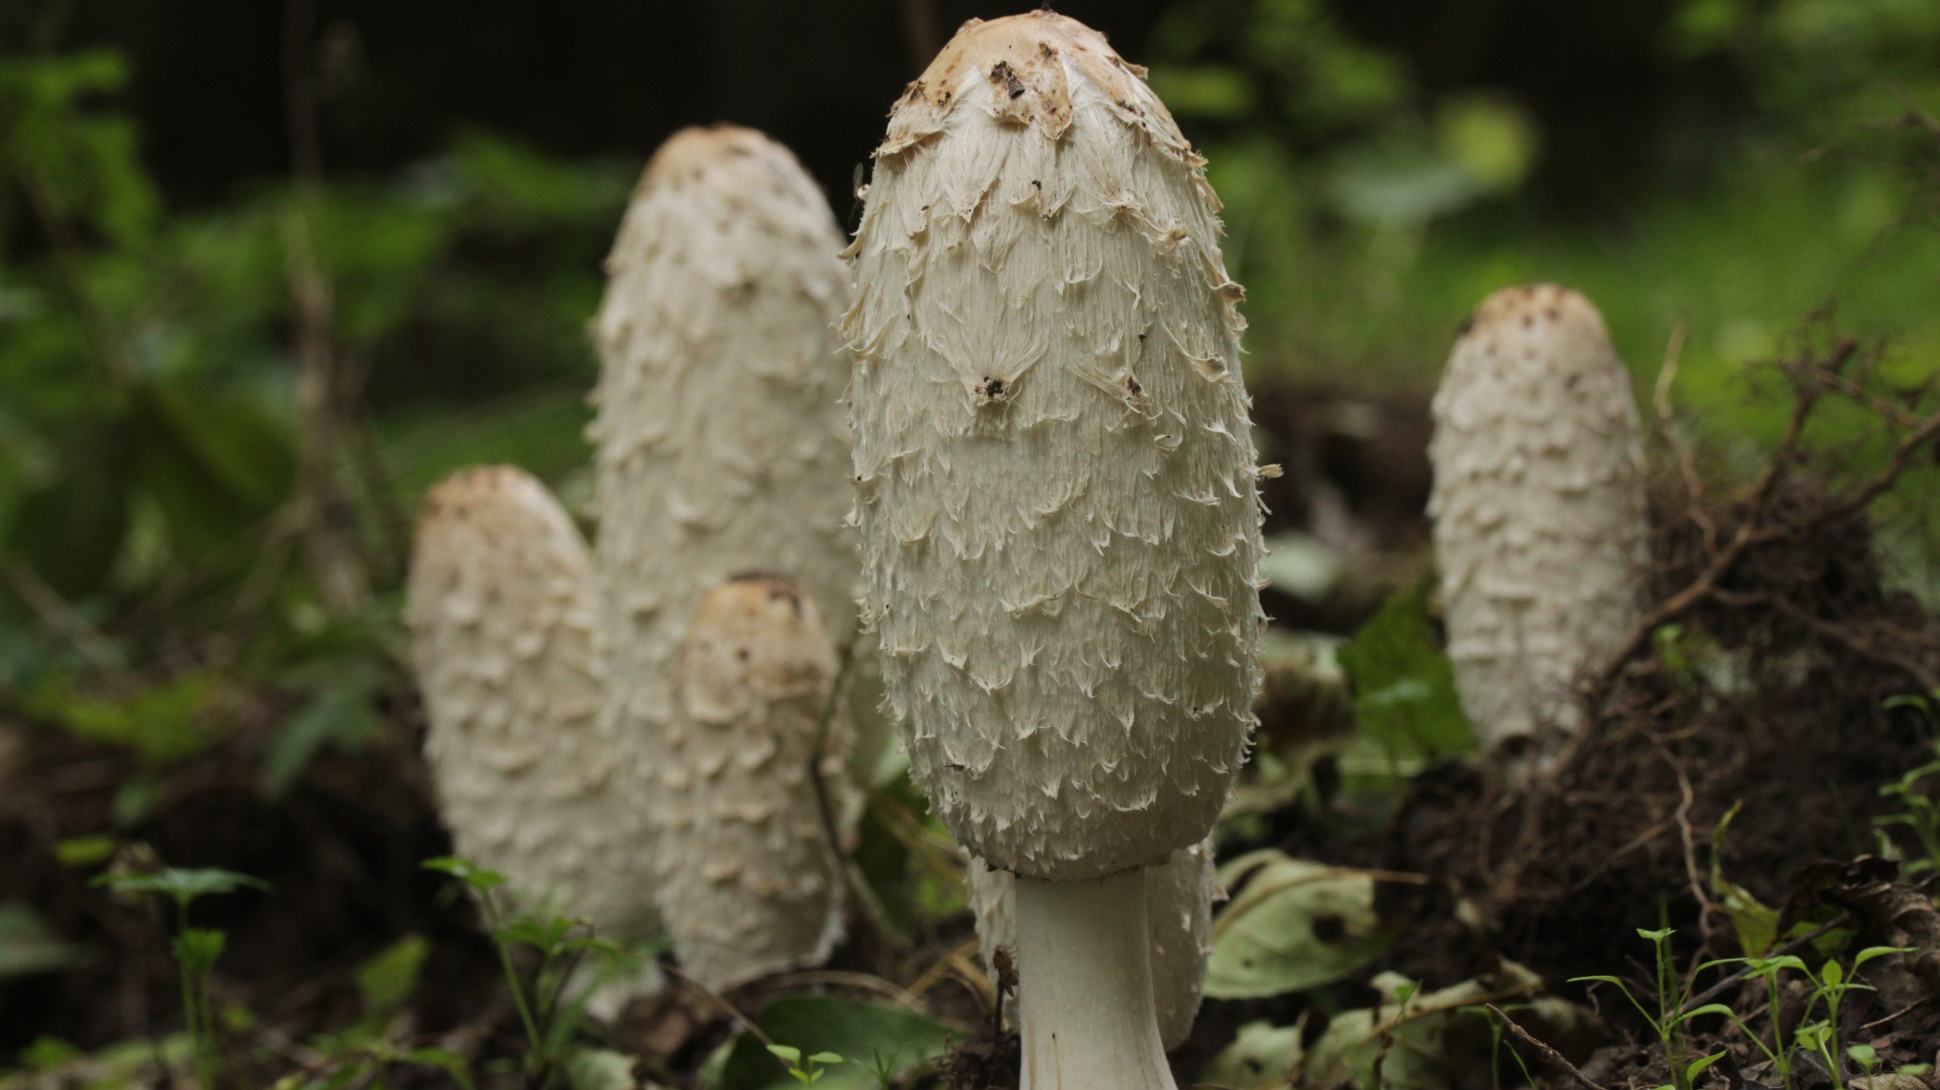 Four tall white mushrooms